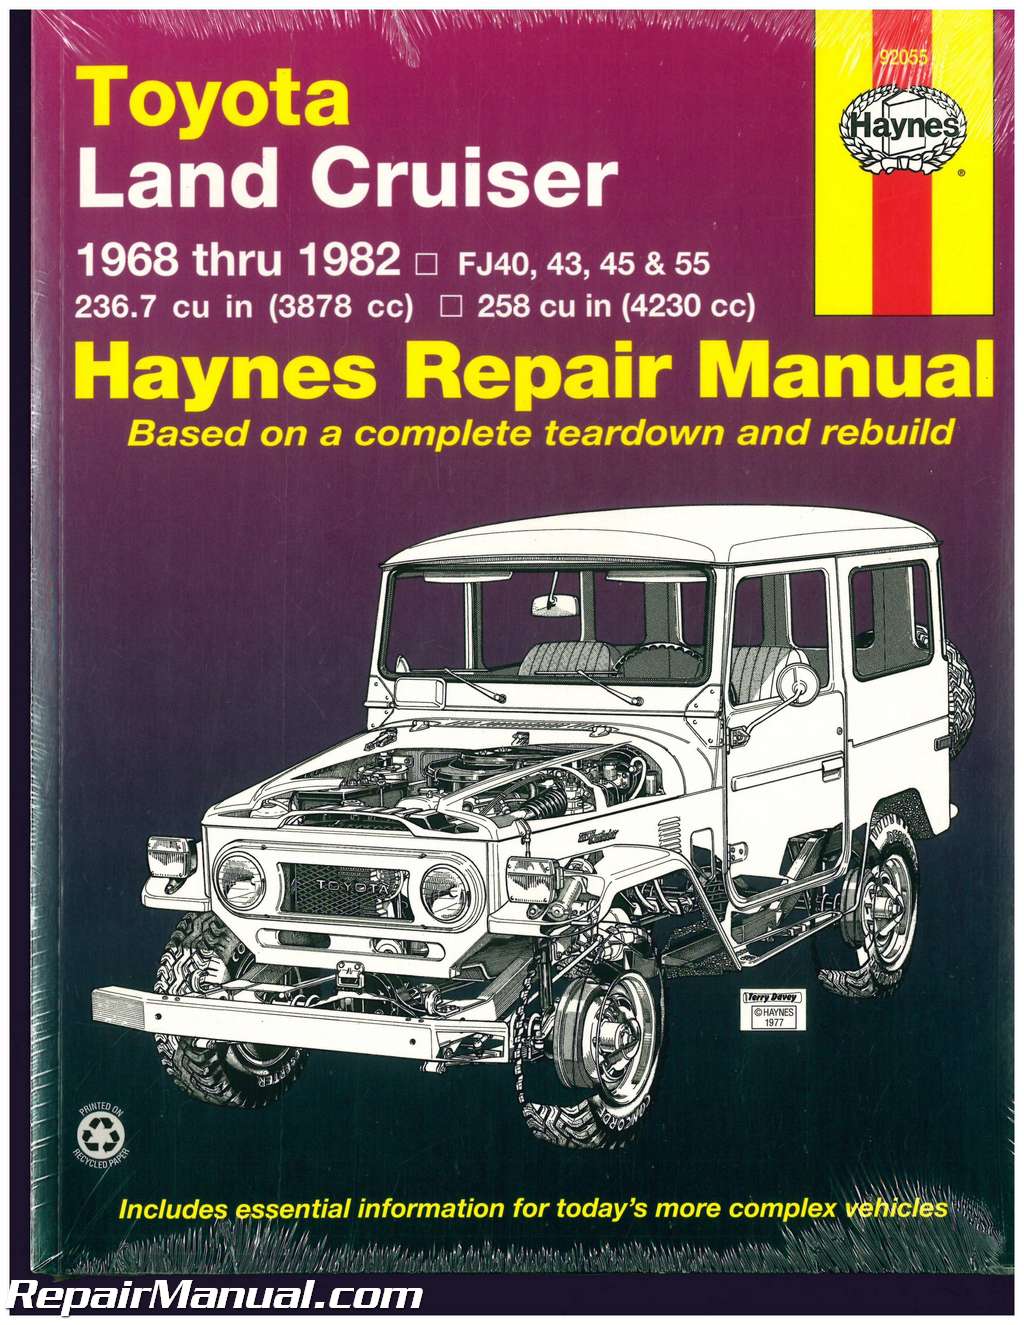 Haynes Toyota Land Cruiser 1968